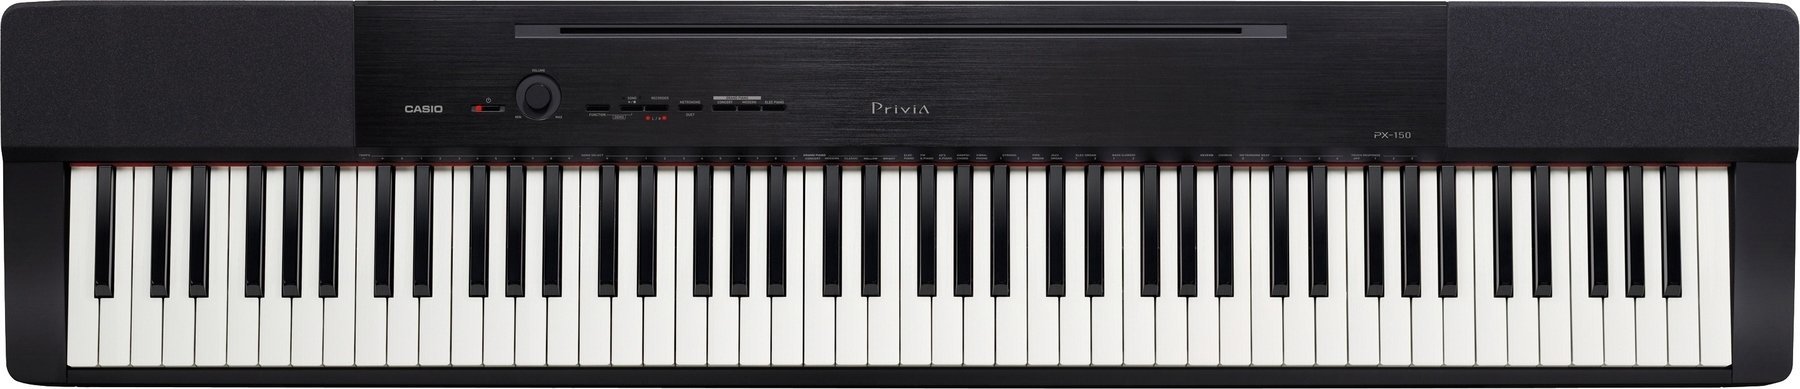 Piano de scène Casio PX150 BK Privia